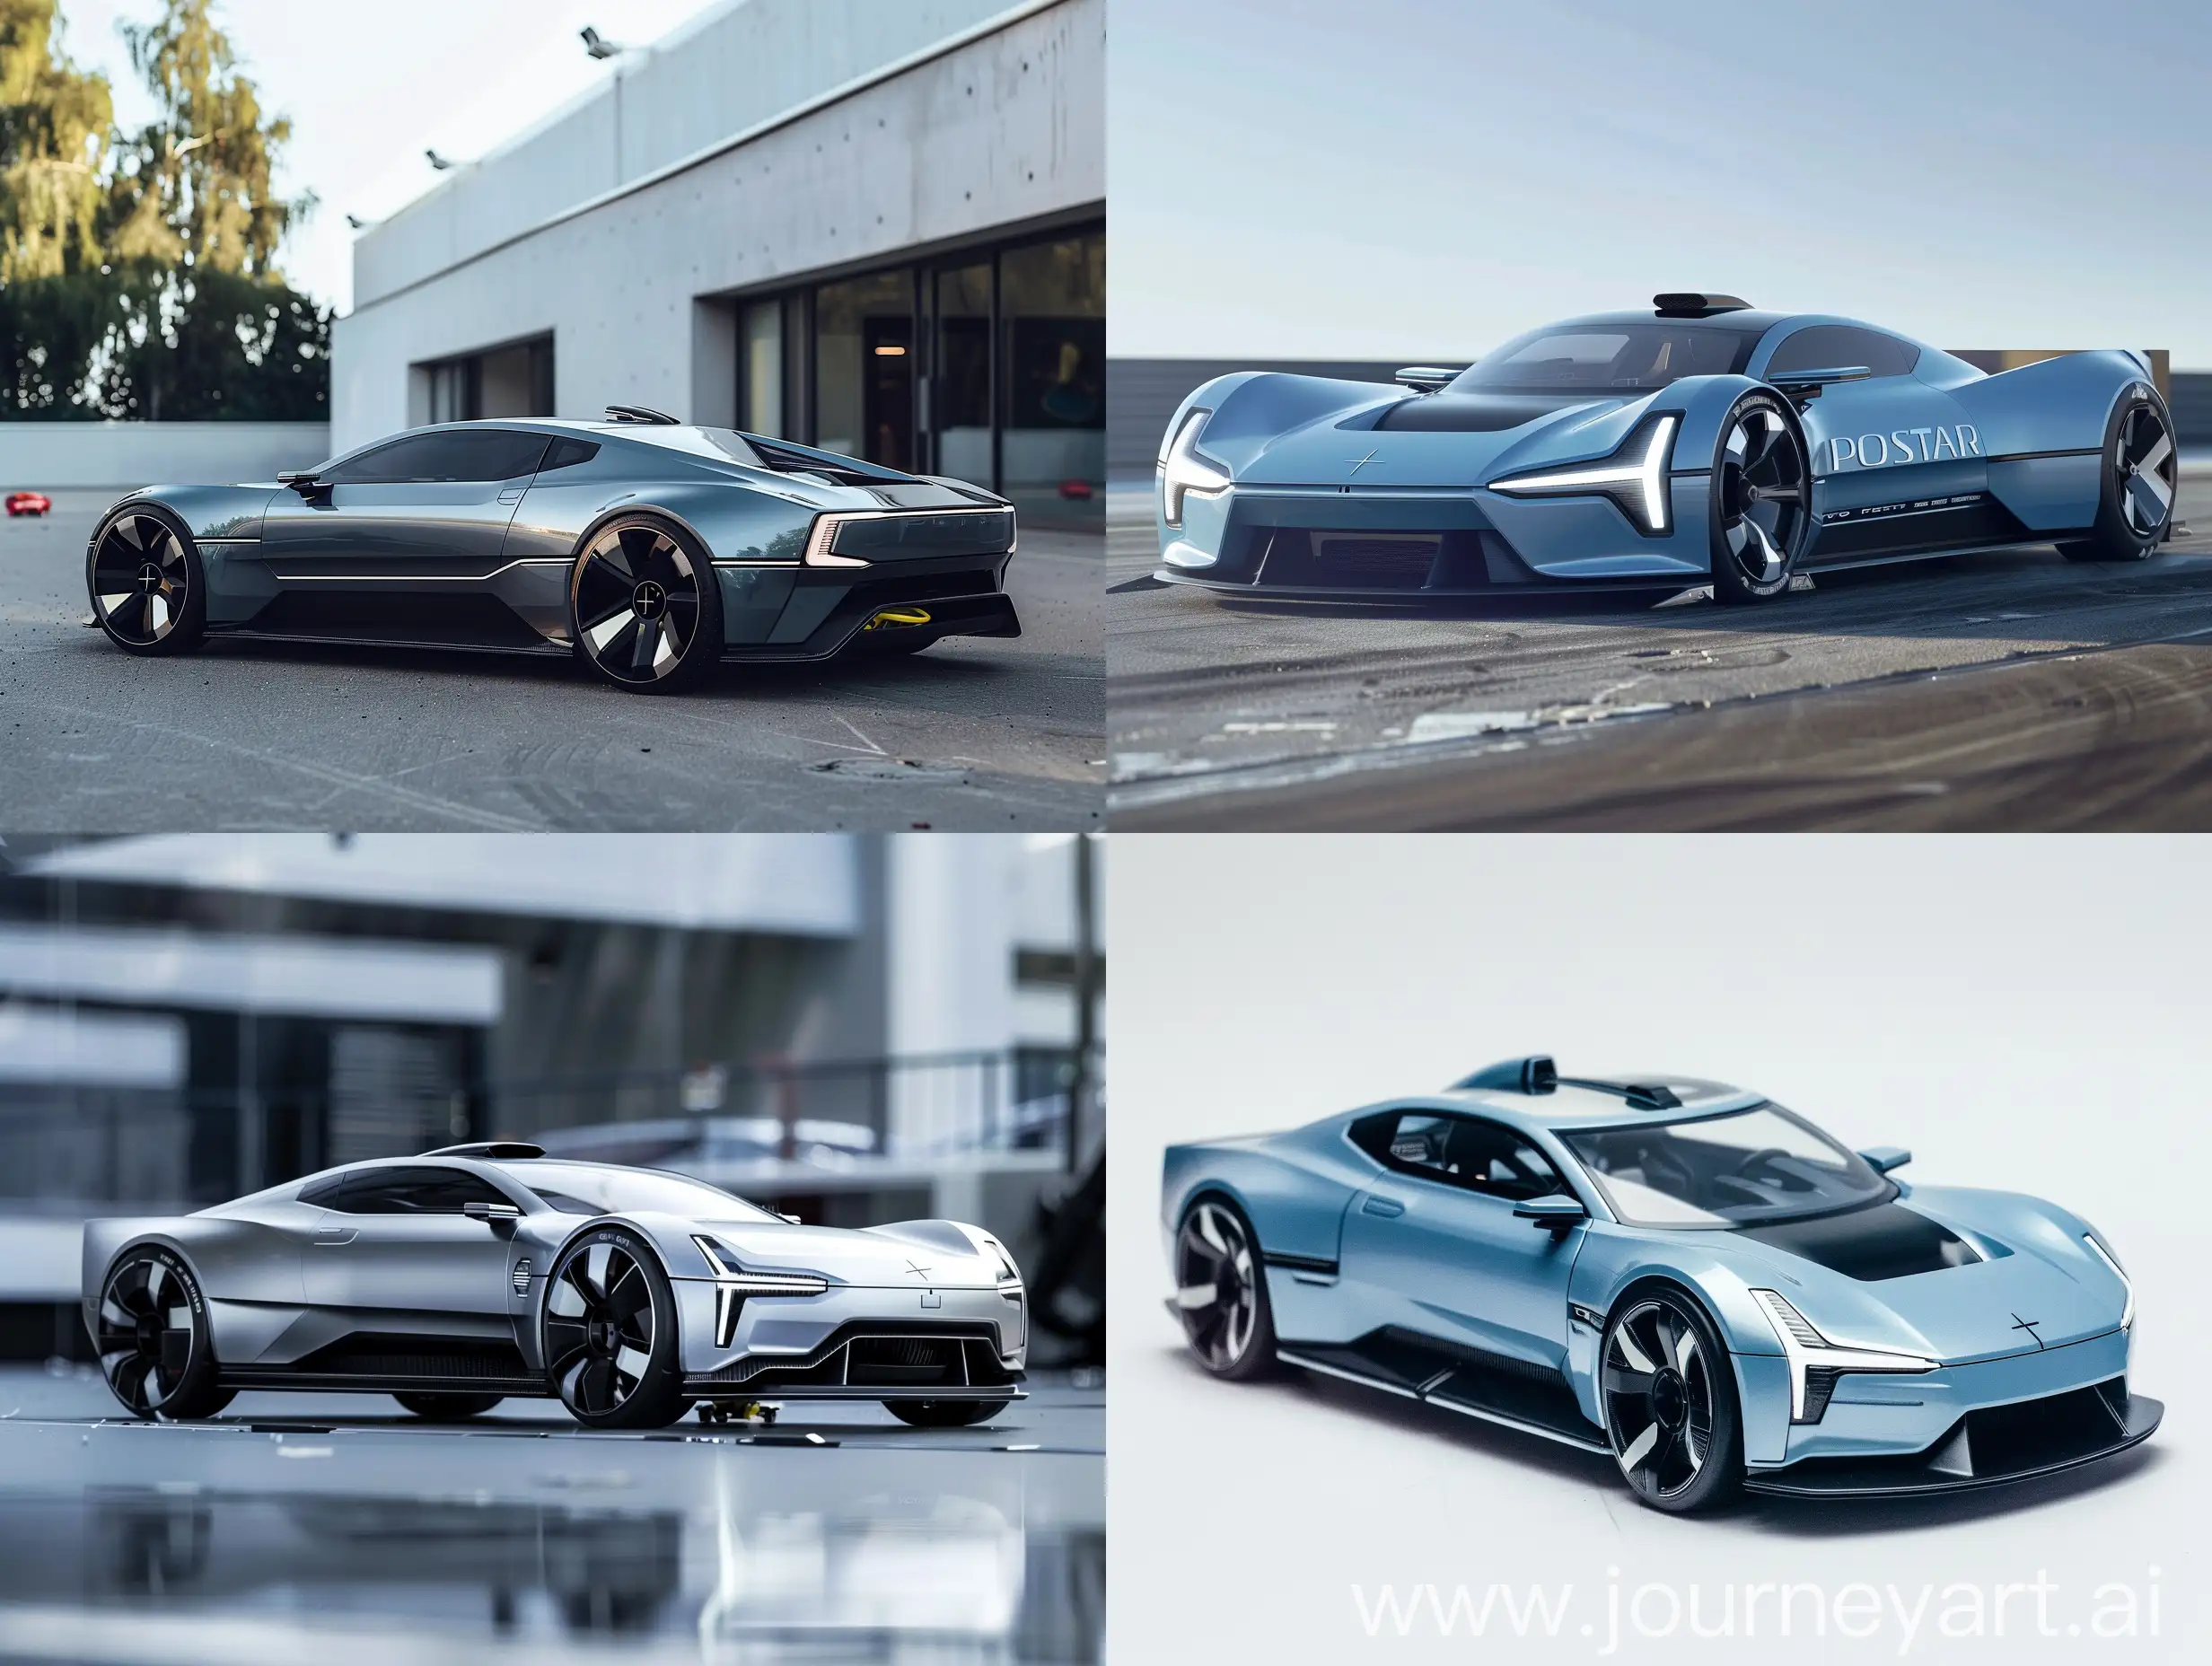 polestar's colaboration with hotwheels to design an futuristic hyper car 